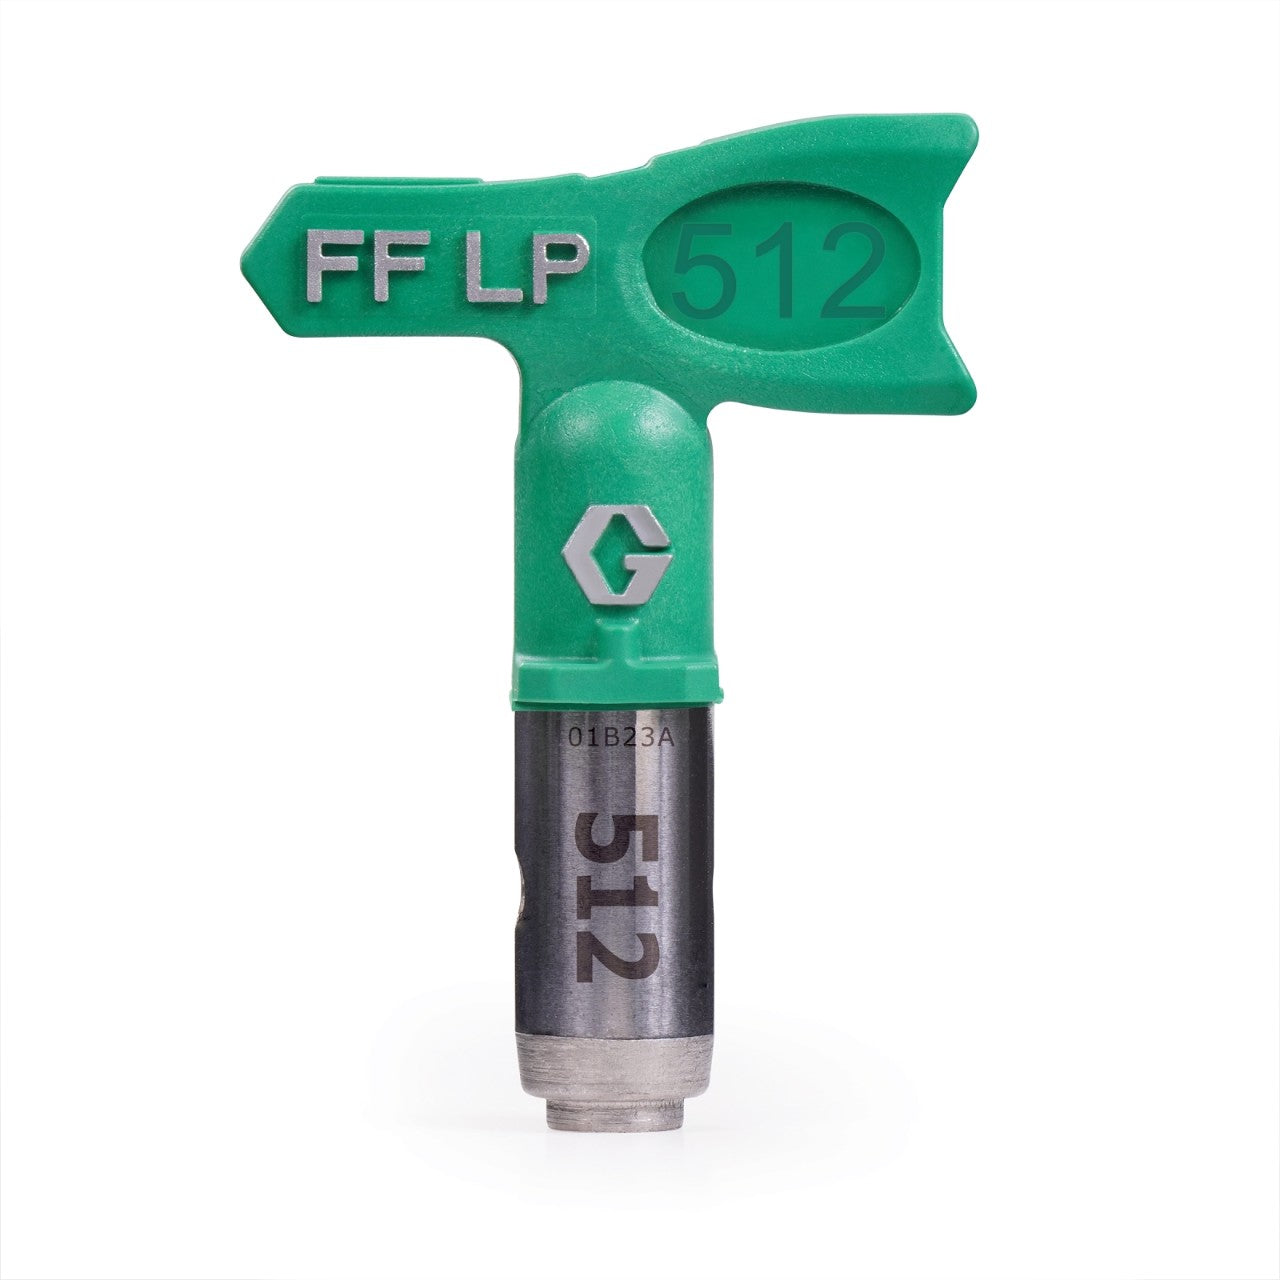 Graco FFLP-512 Tip